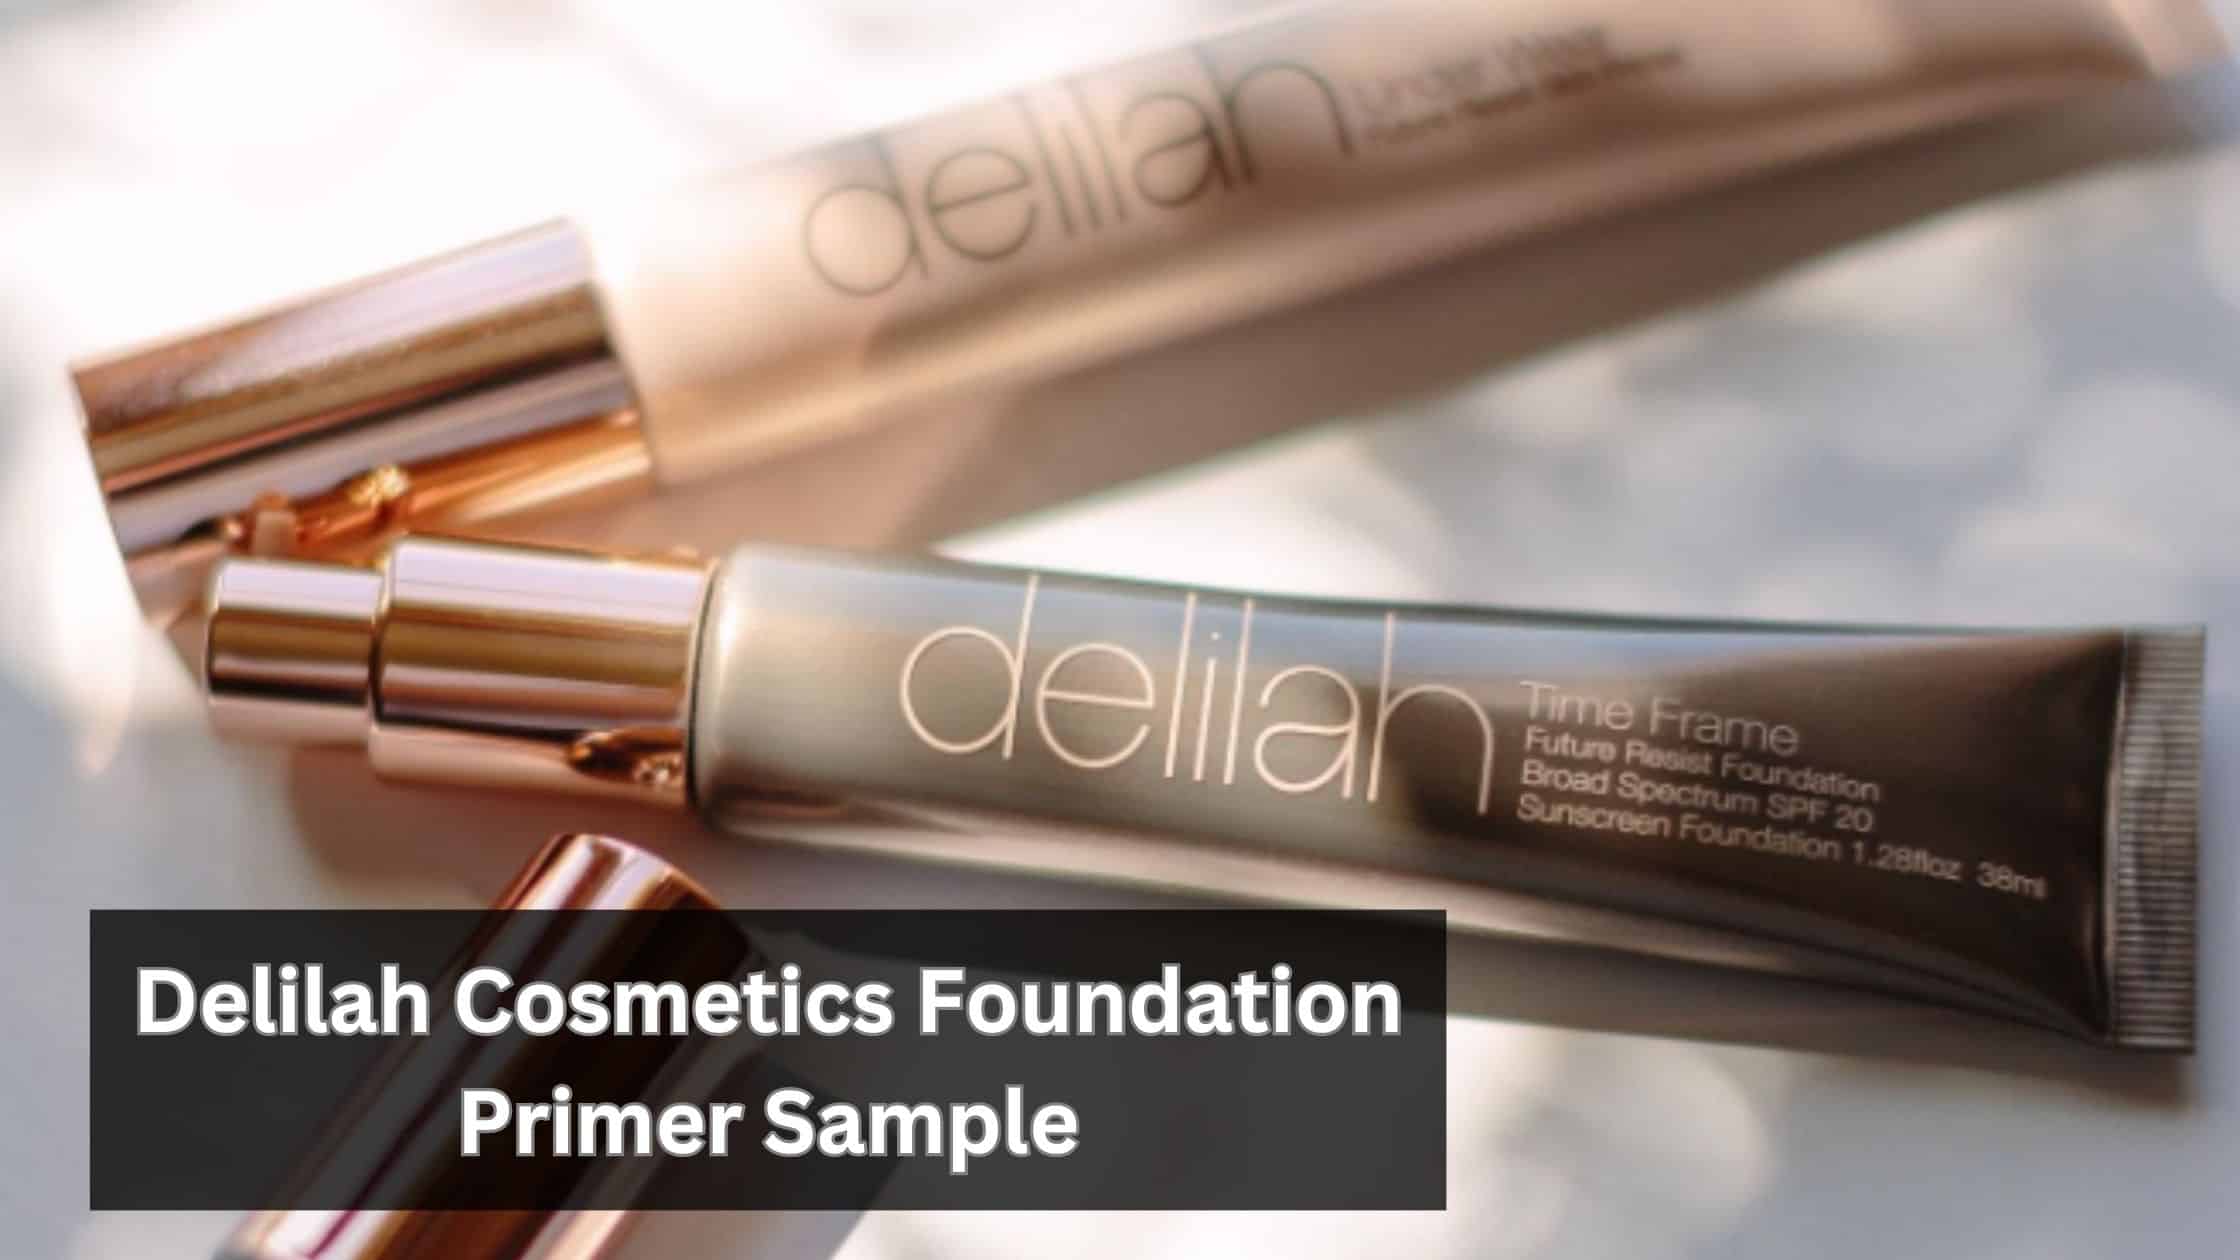 Delilah Cosmetics Foundation Primer Sample